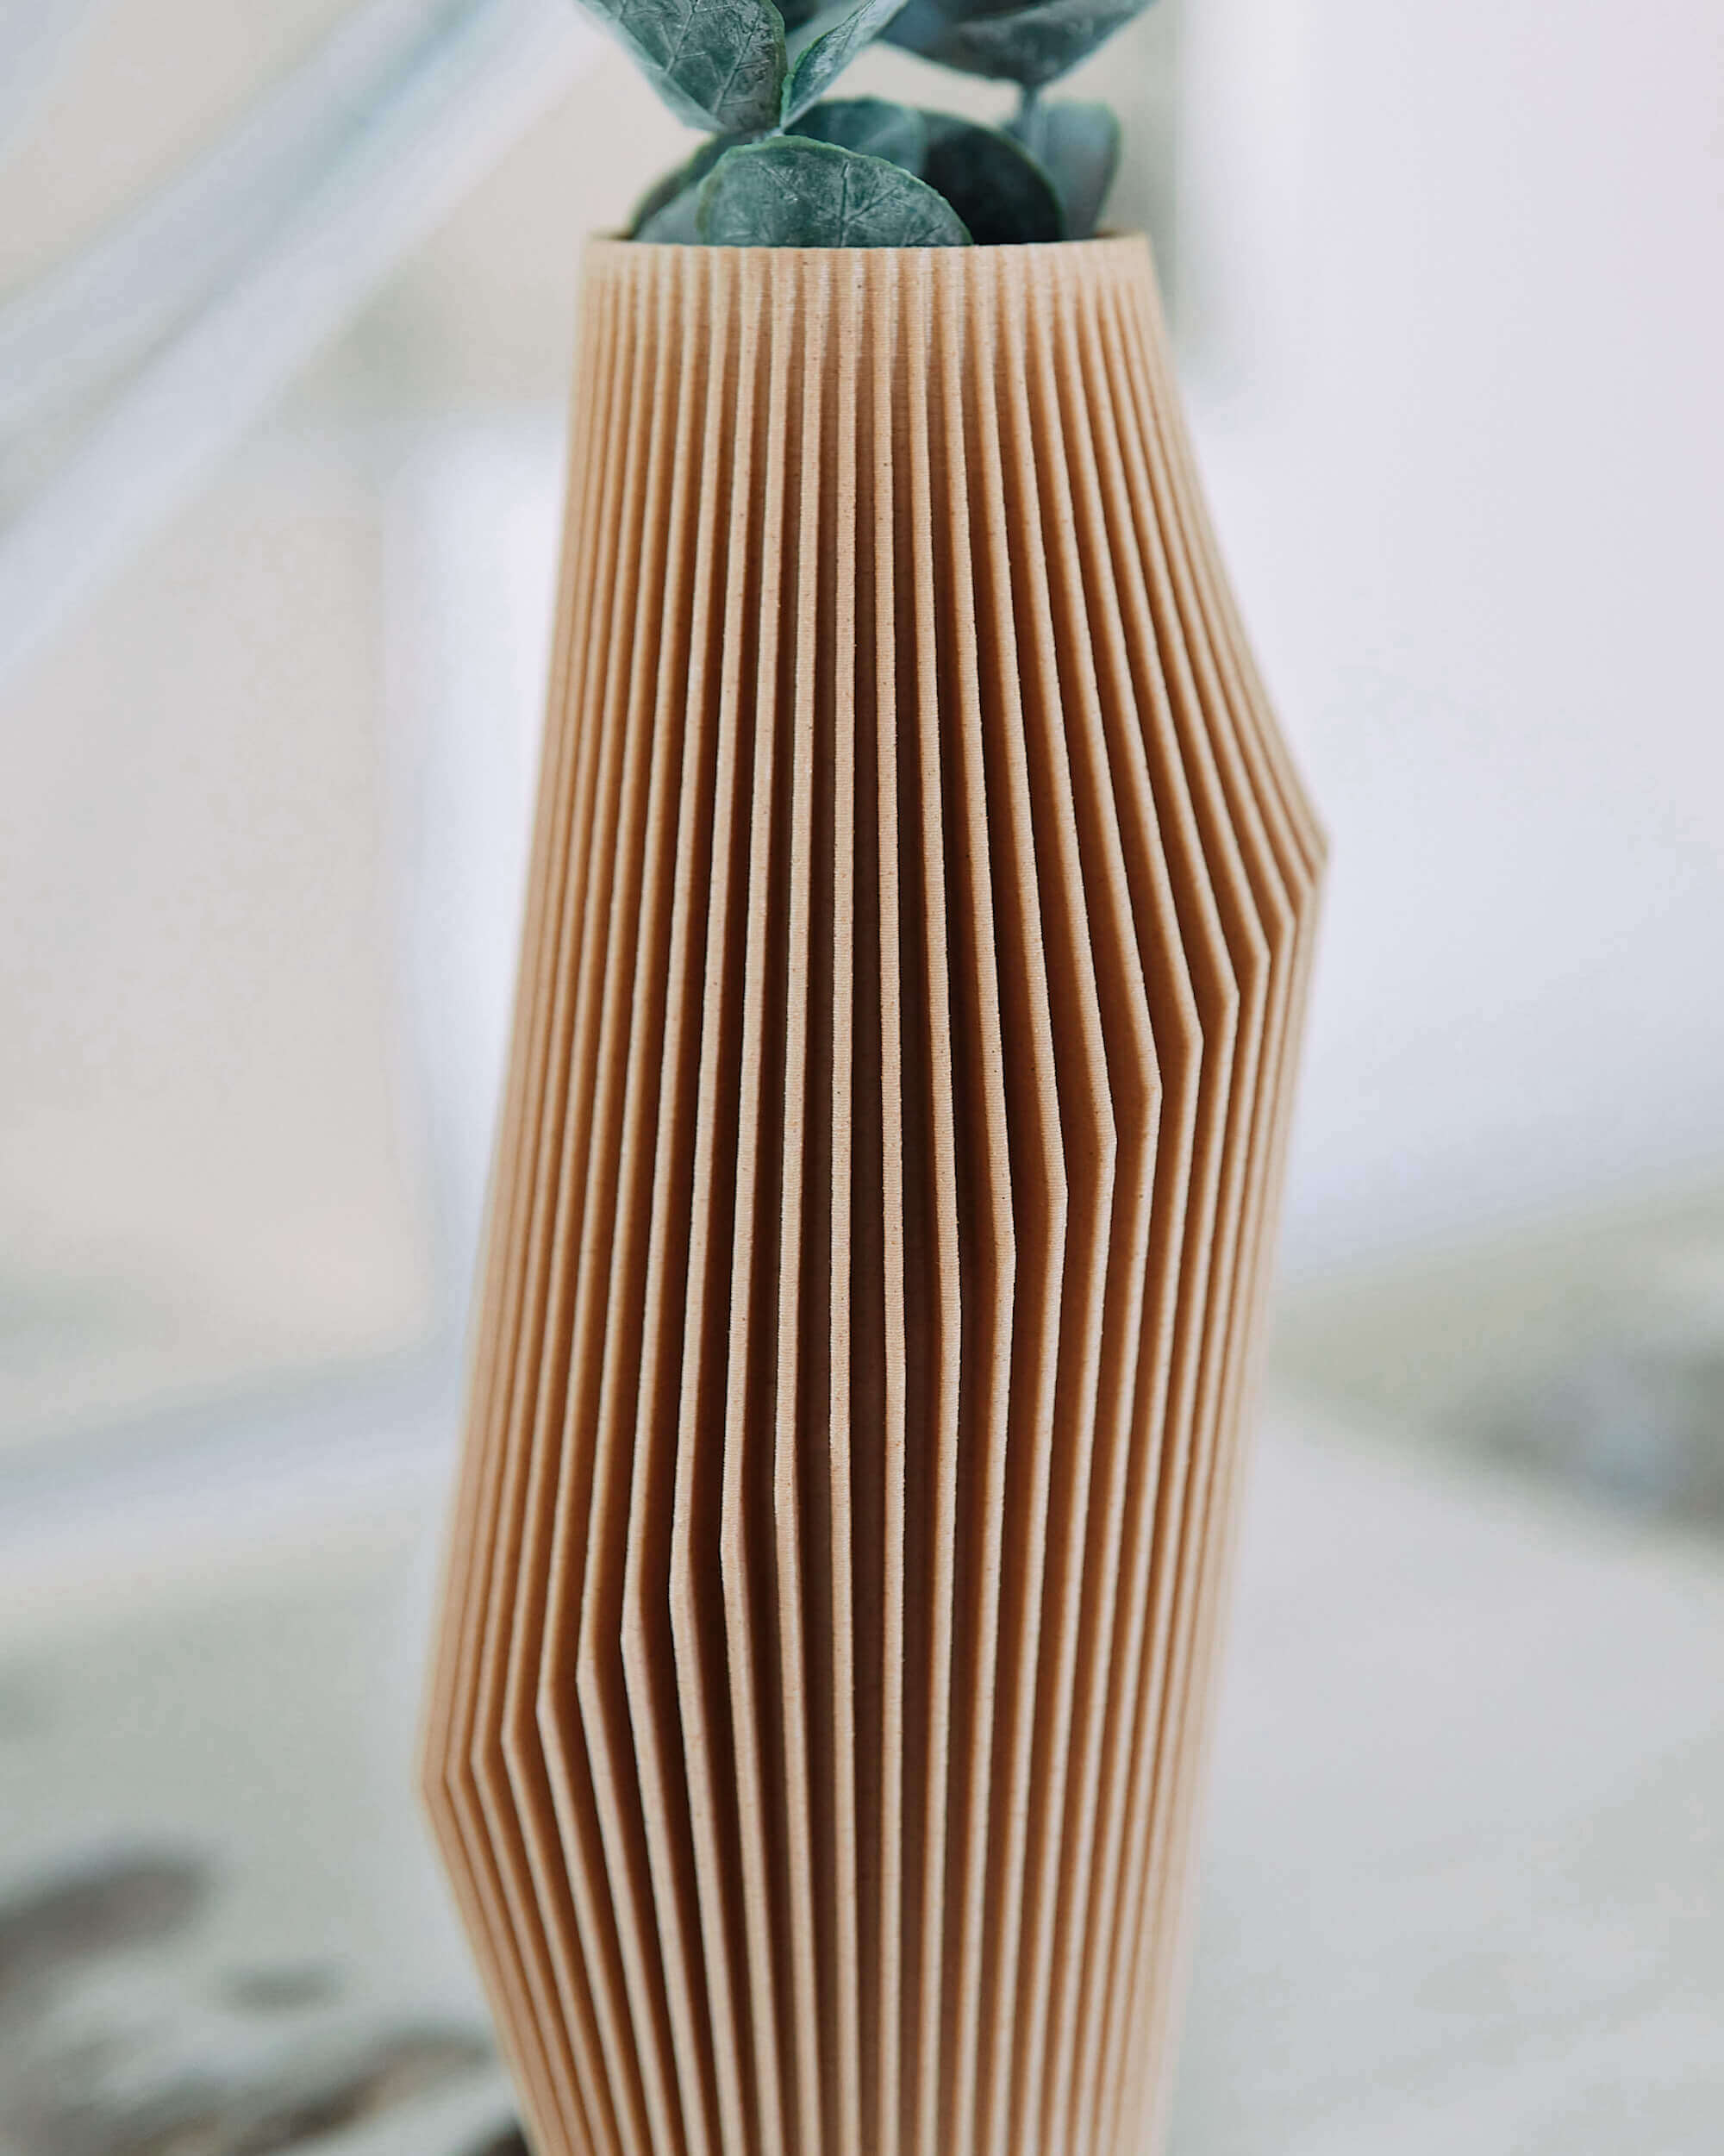 A cream color vase, unique vase.